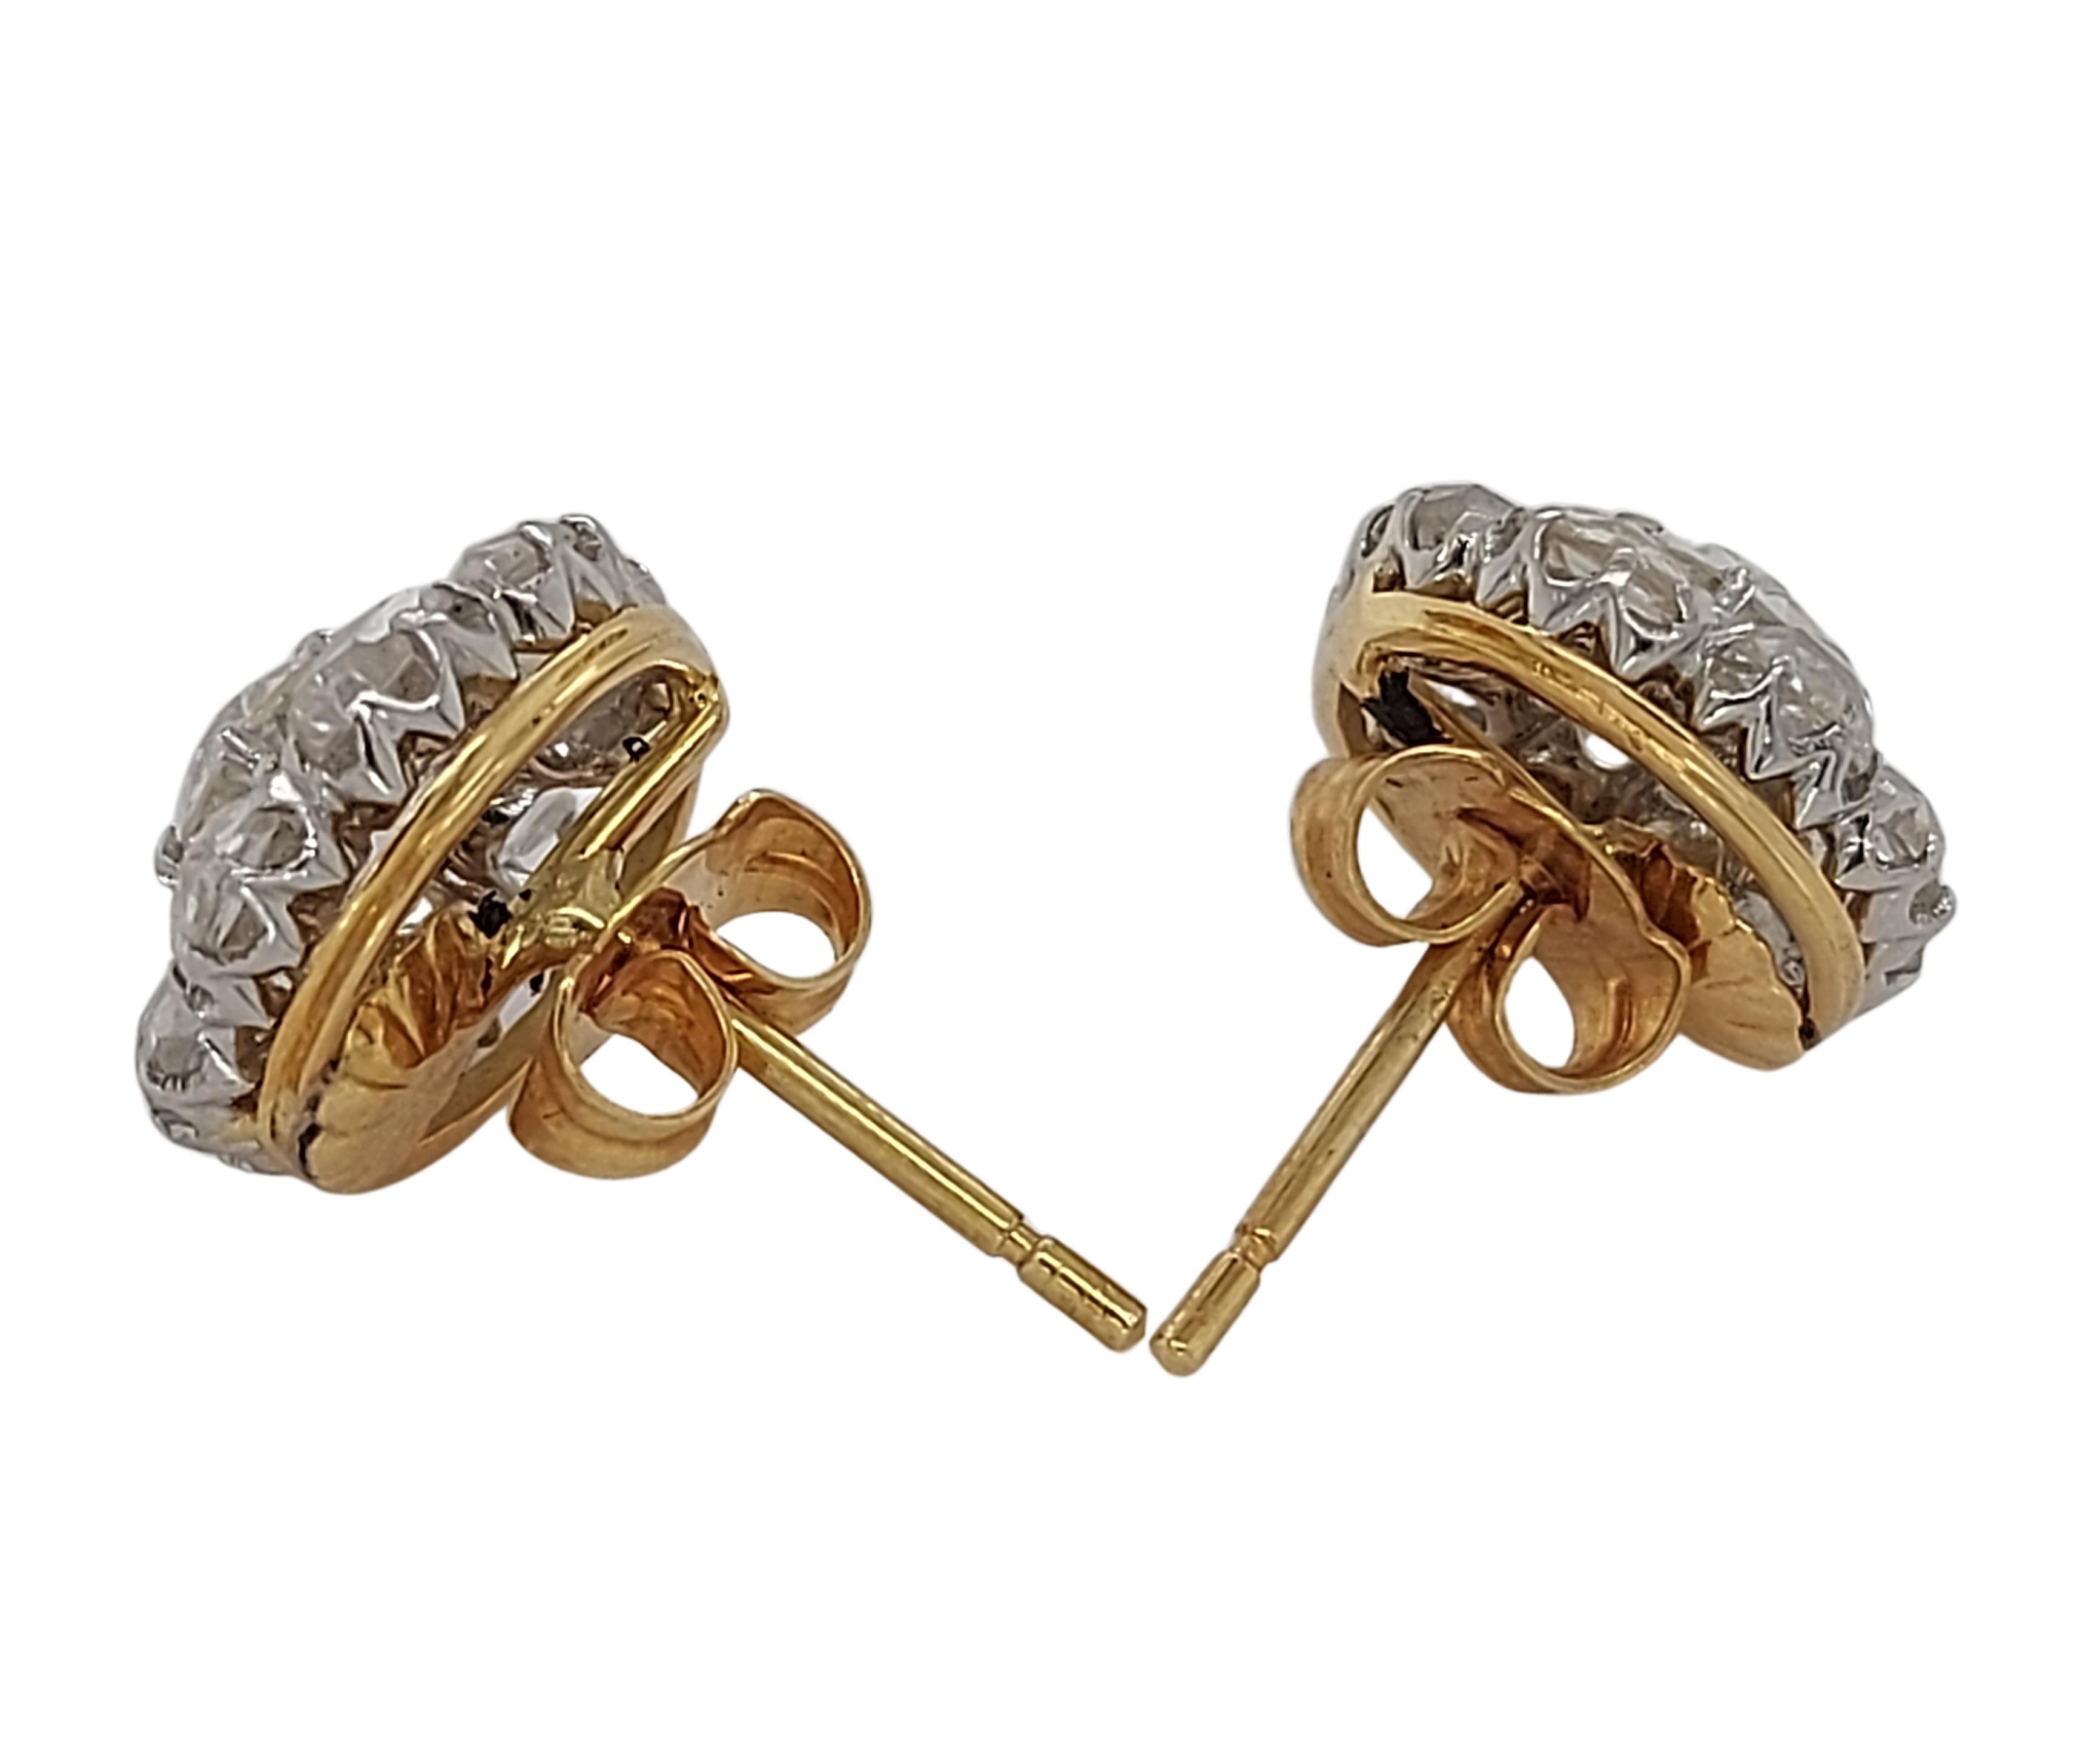 Artisan Stunning Diamond Stud Earrings in 18kt Yellow & White Gold